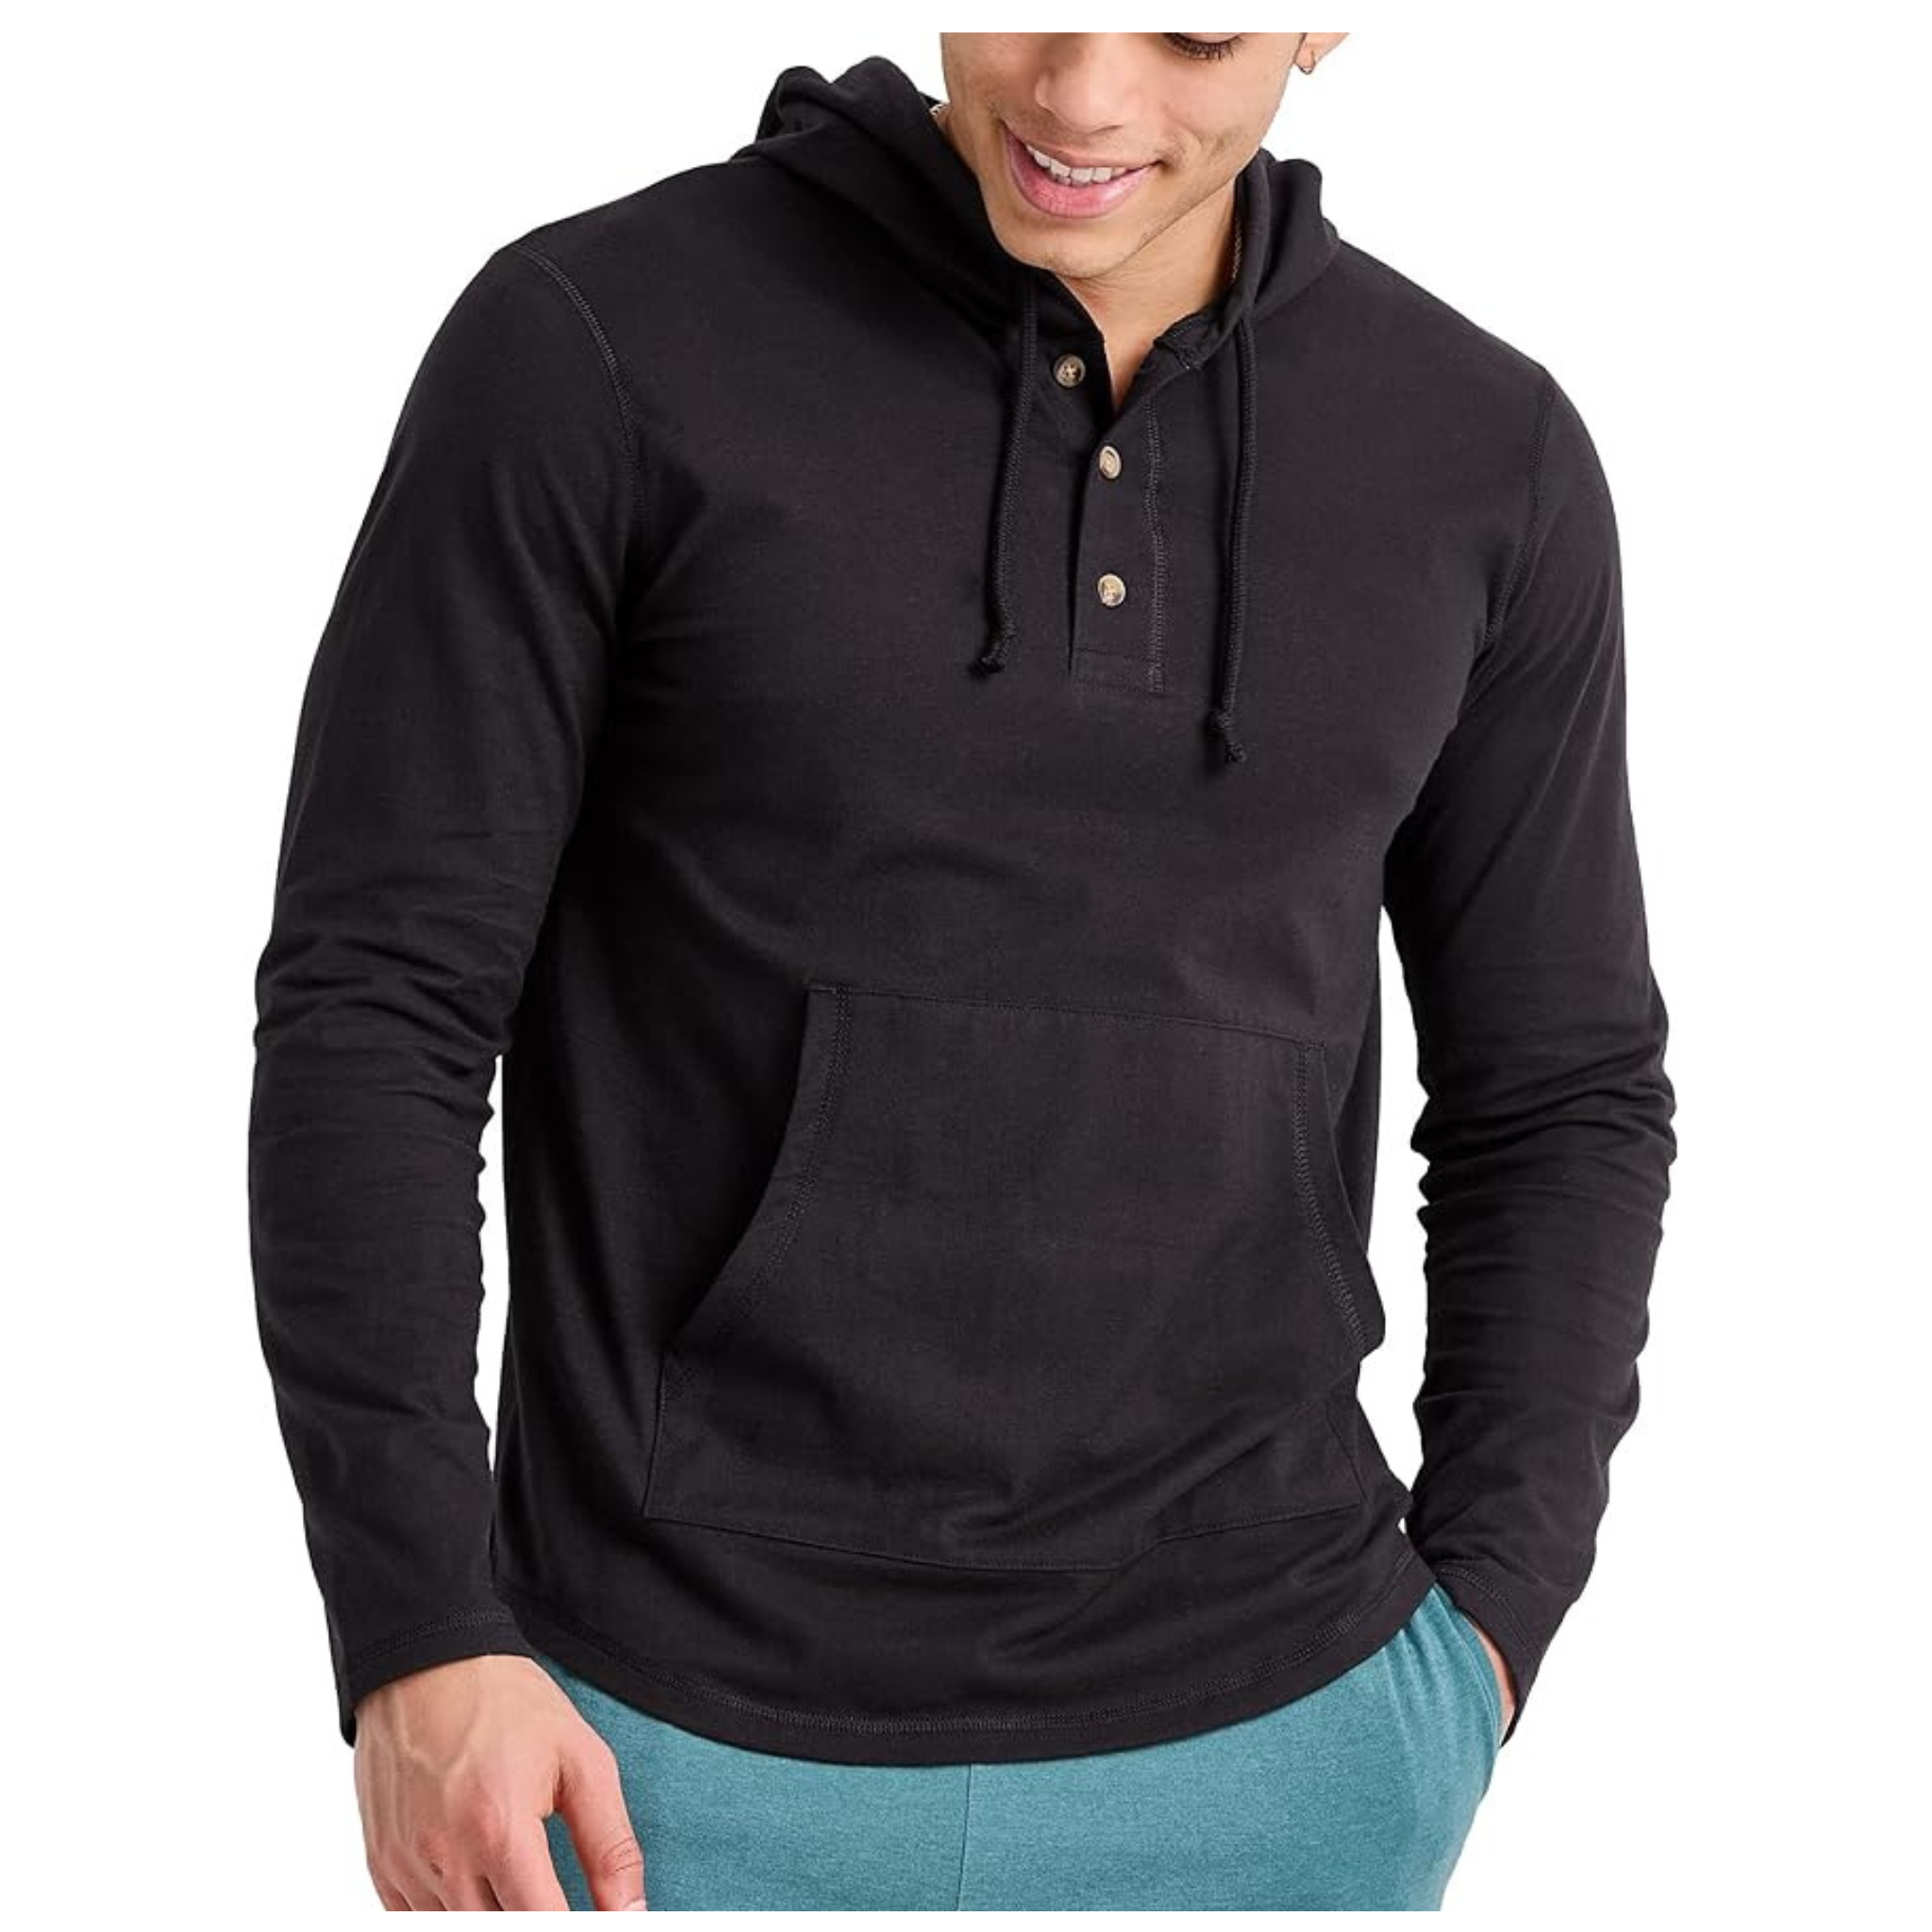 Hanes Men's Originals Tri-Blend Jersey T-Shirt Hoodie